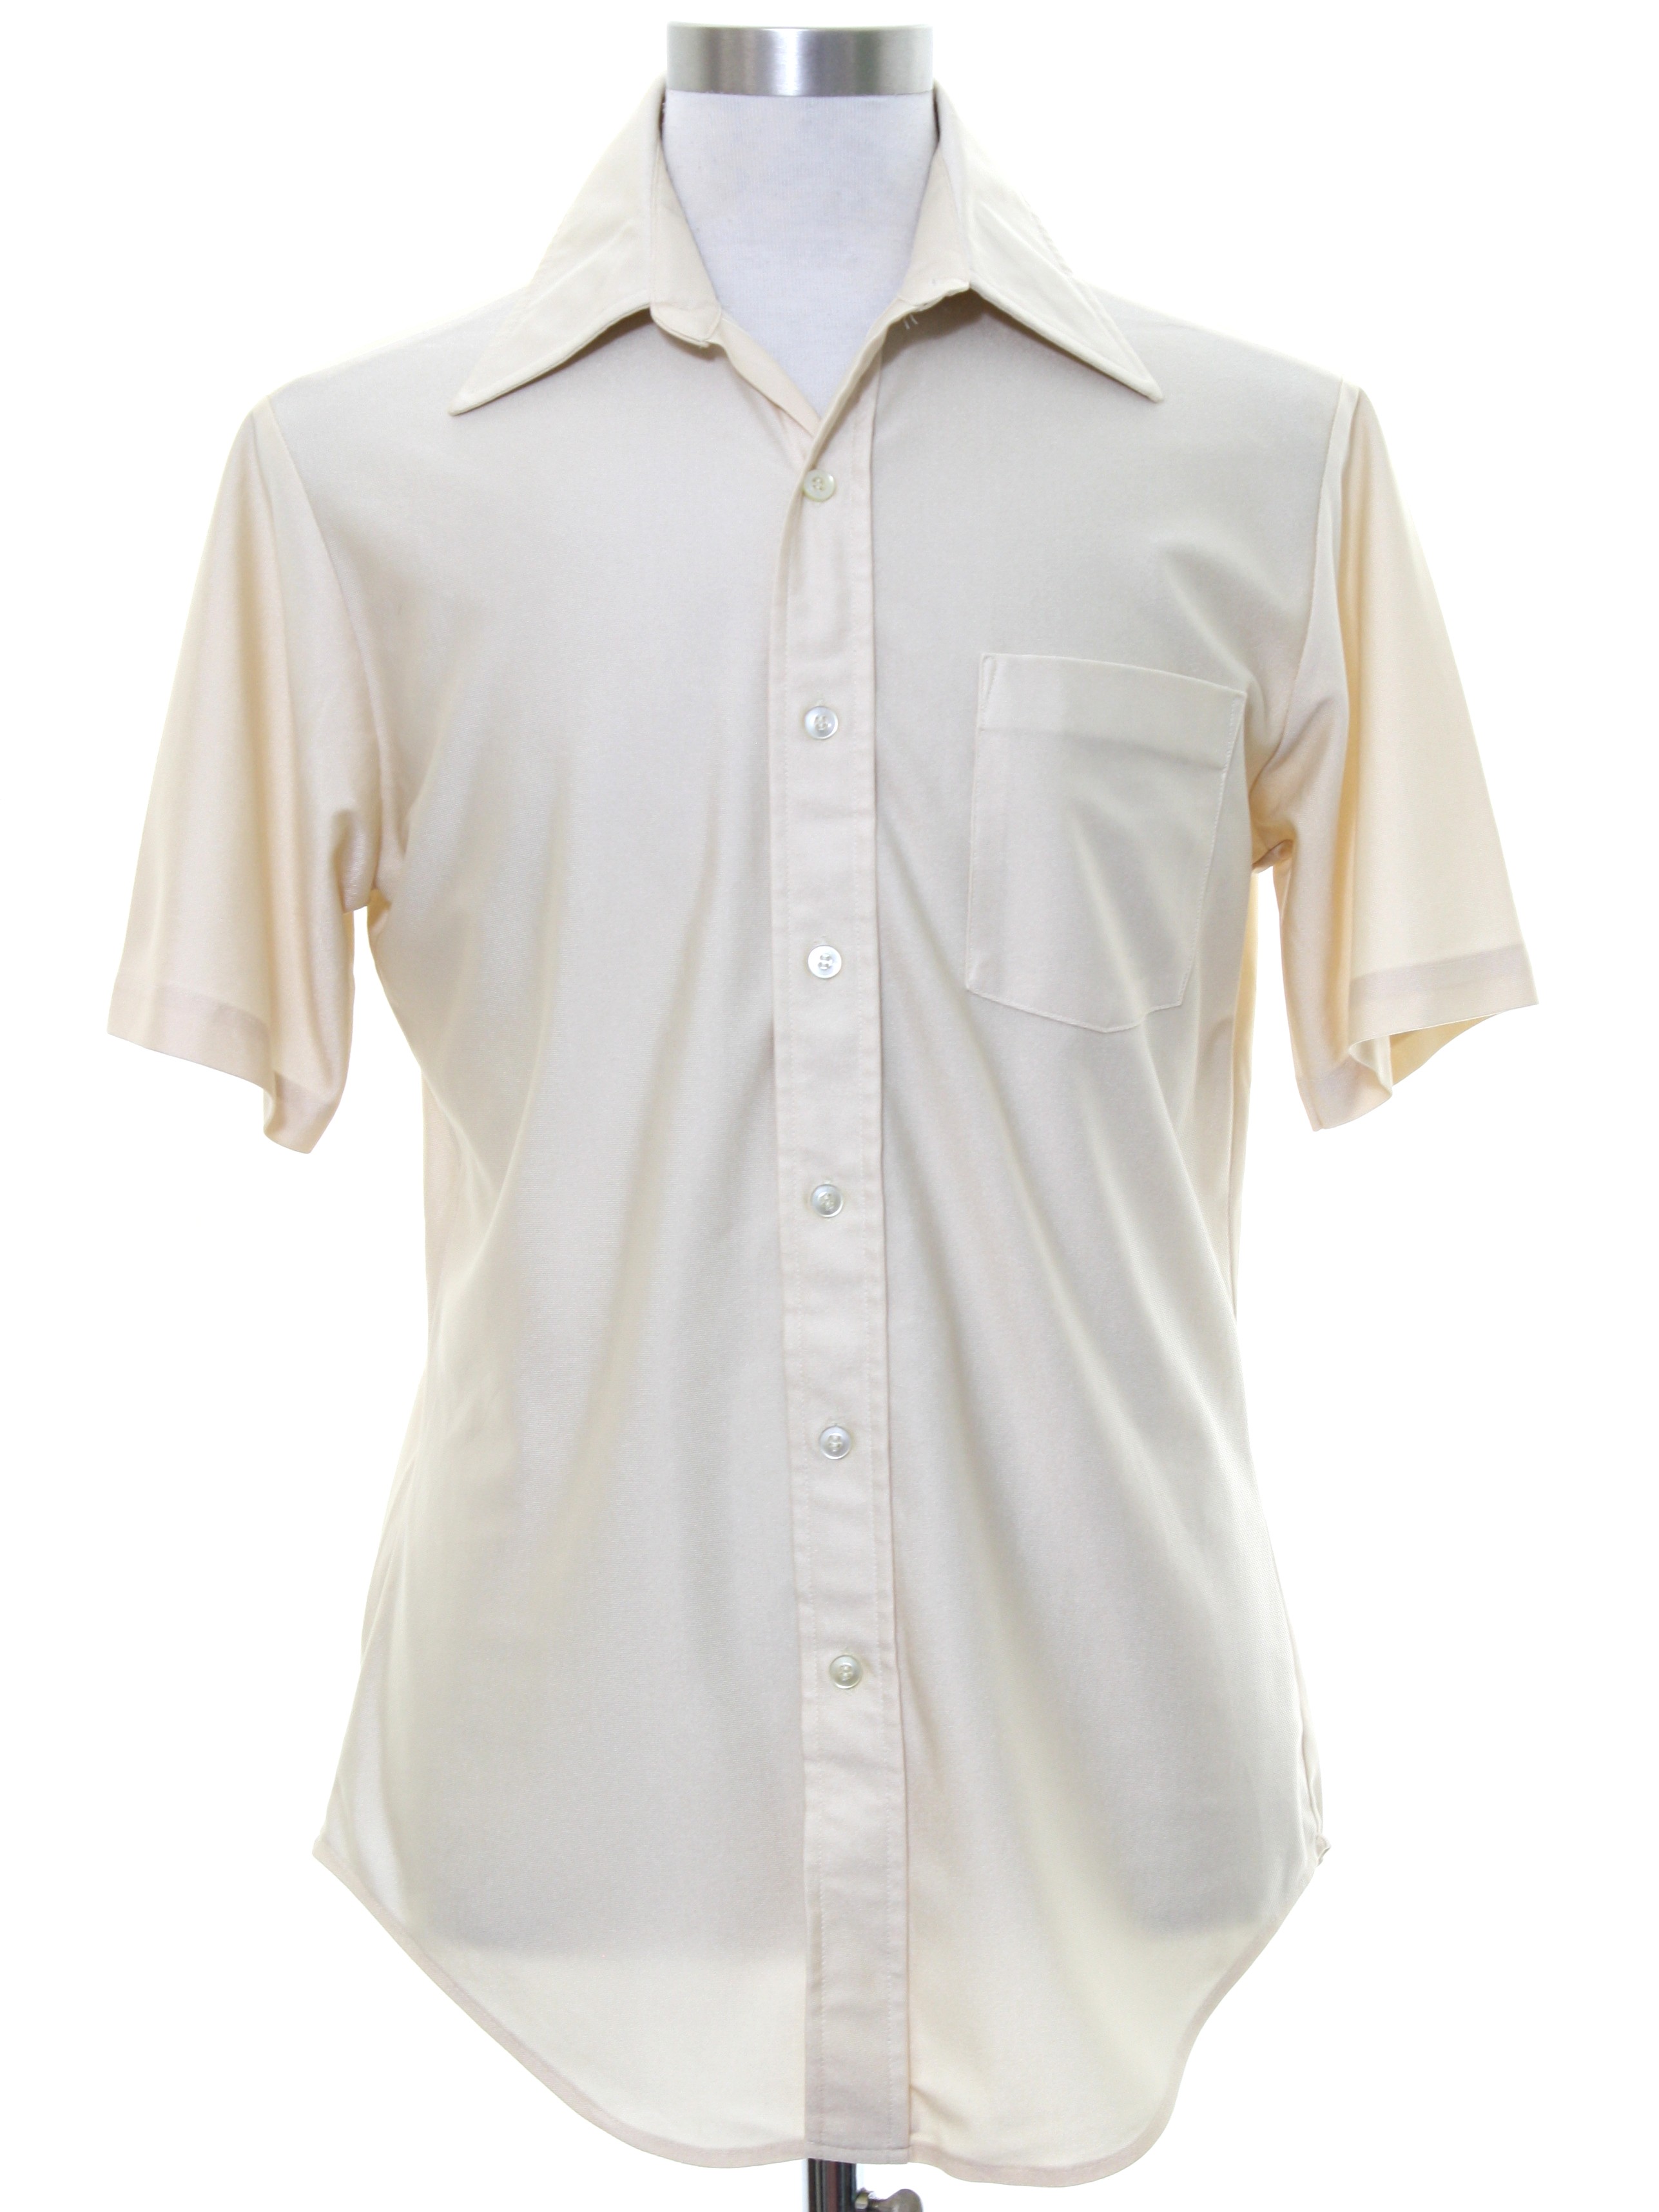 Retro 70s Disco Shirt (Qiana) : 70s -Qiana- Mens cream background nylon ...